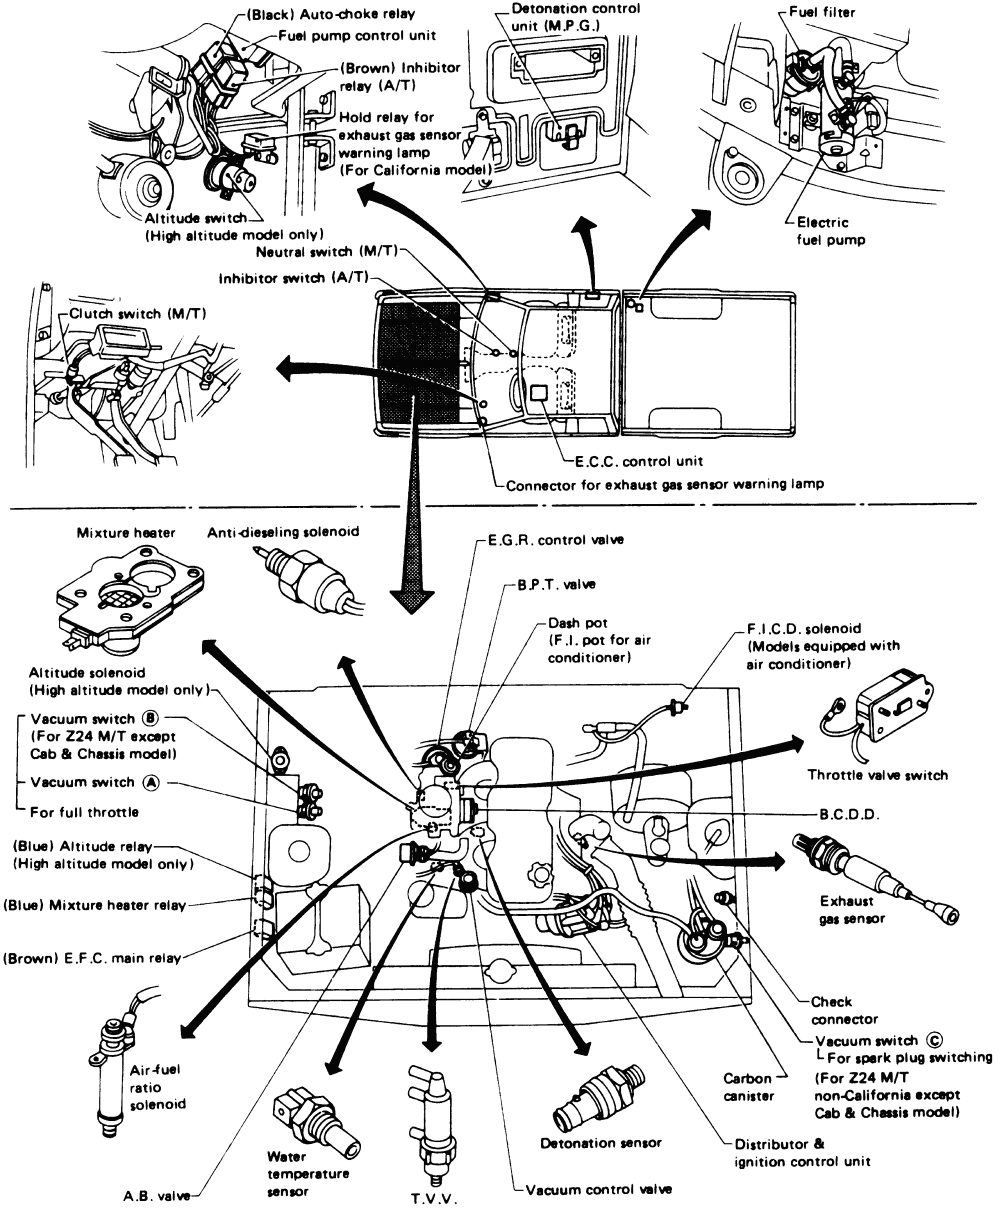 1987 Nissan Pickup Vacuum Hose Diagram Wiring Schematic - Wiring